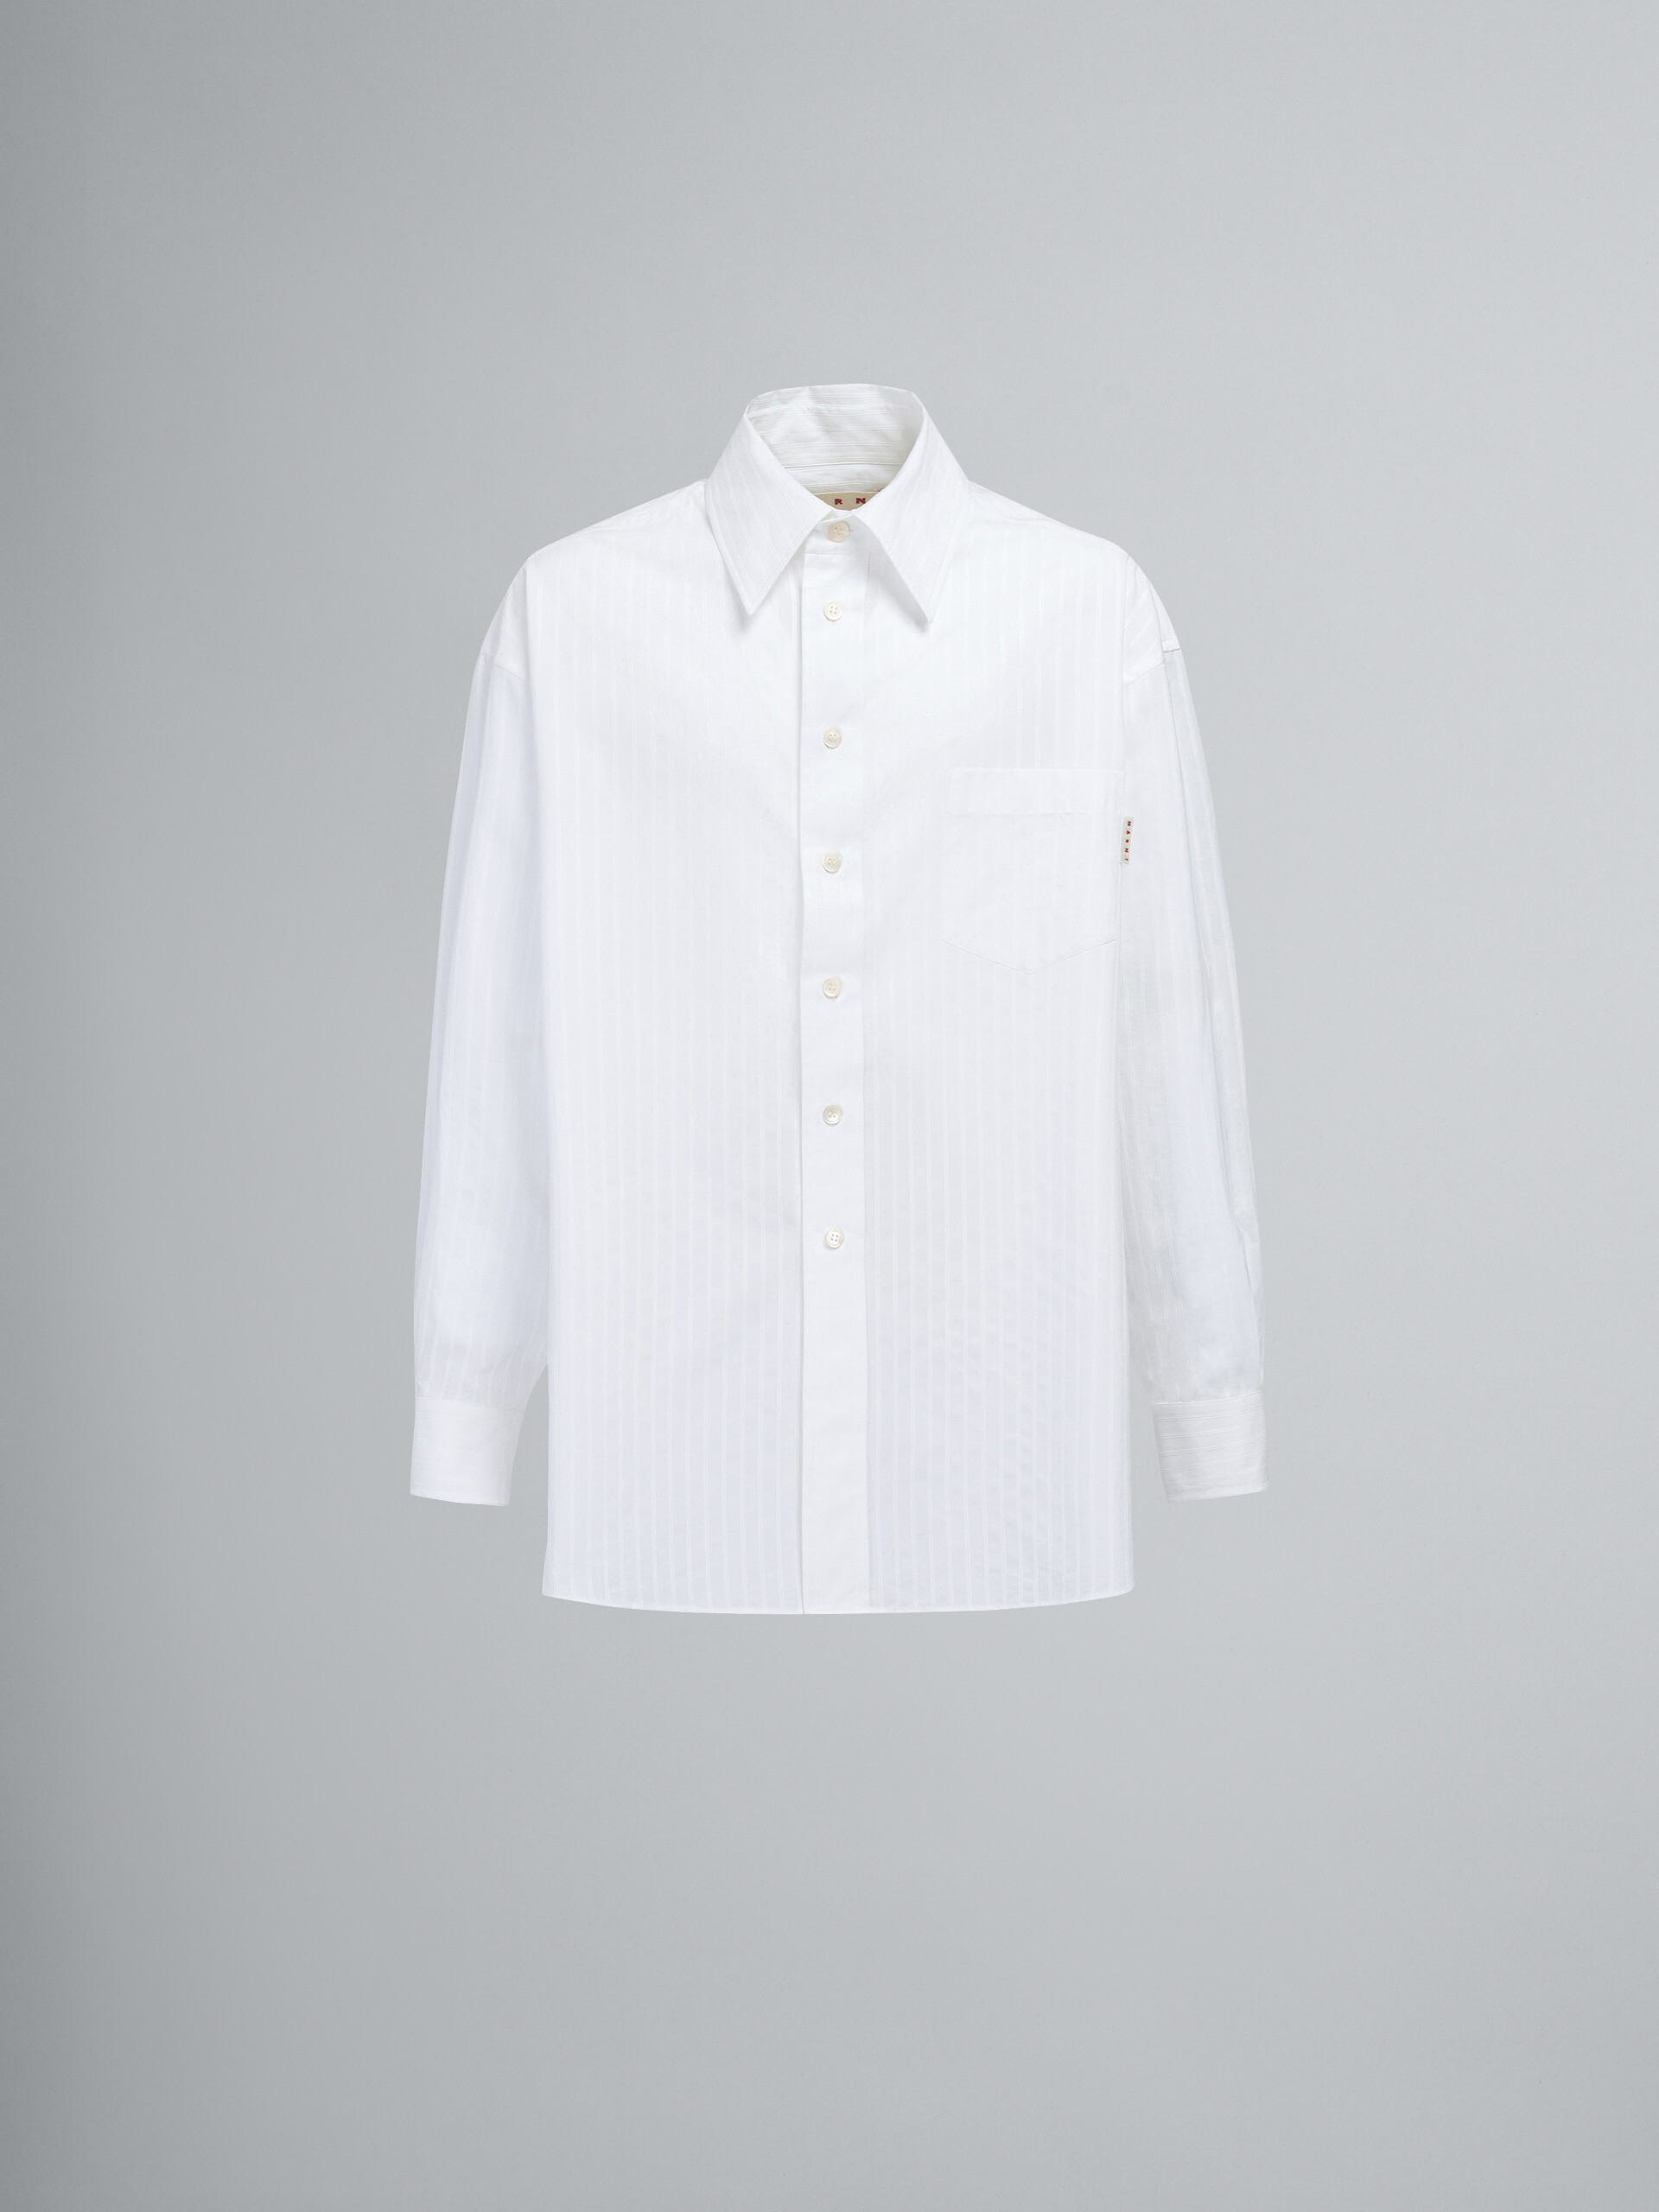 Textured poplin shirt - Shirts - Image 1